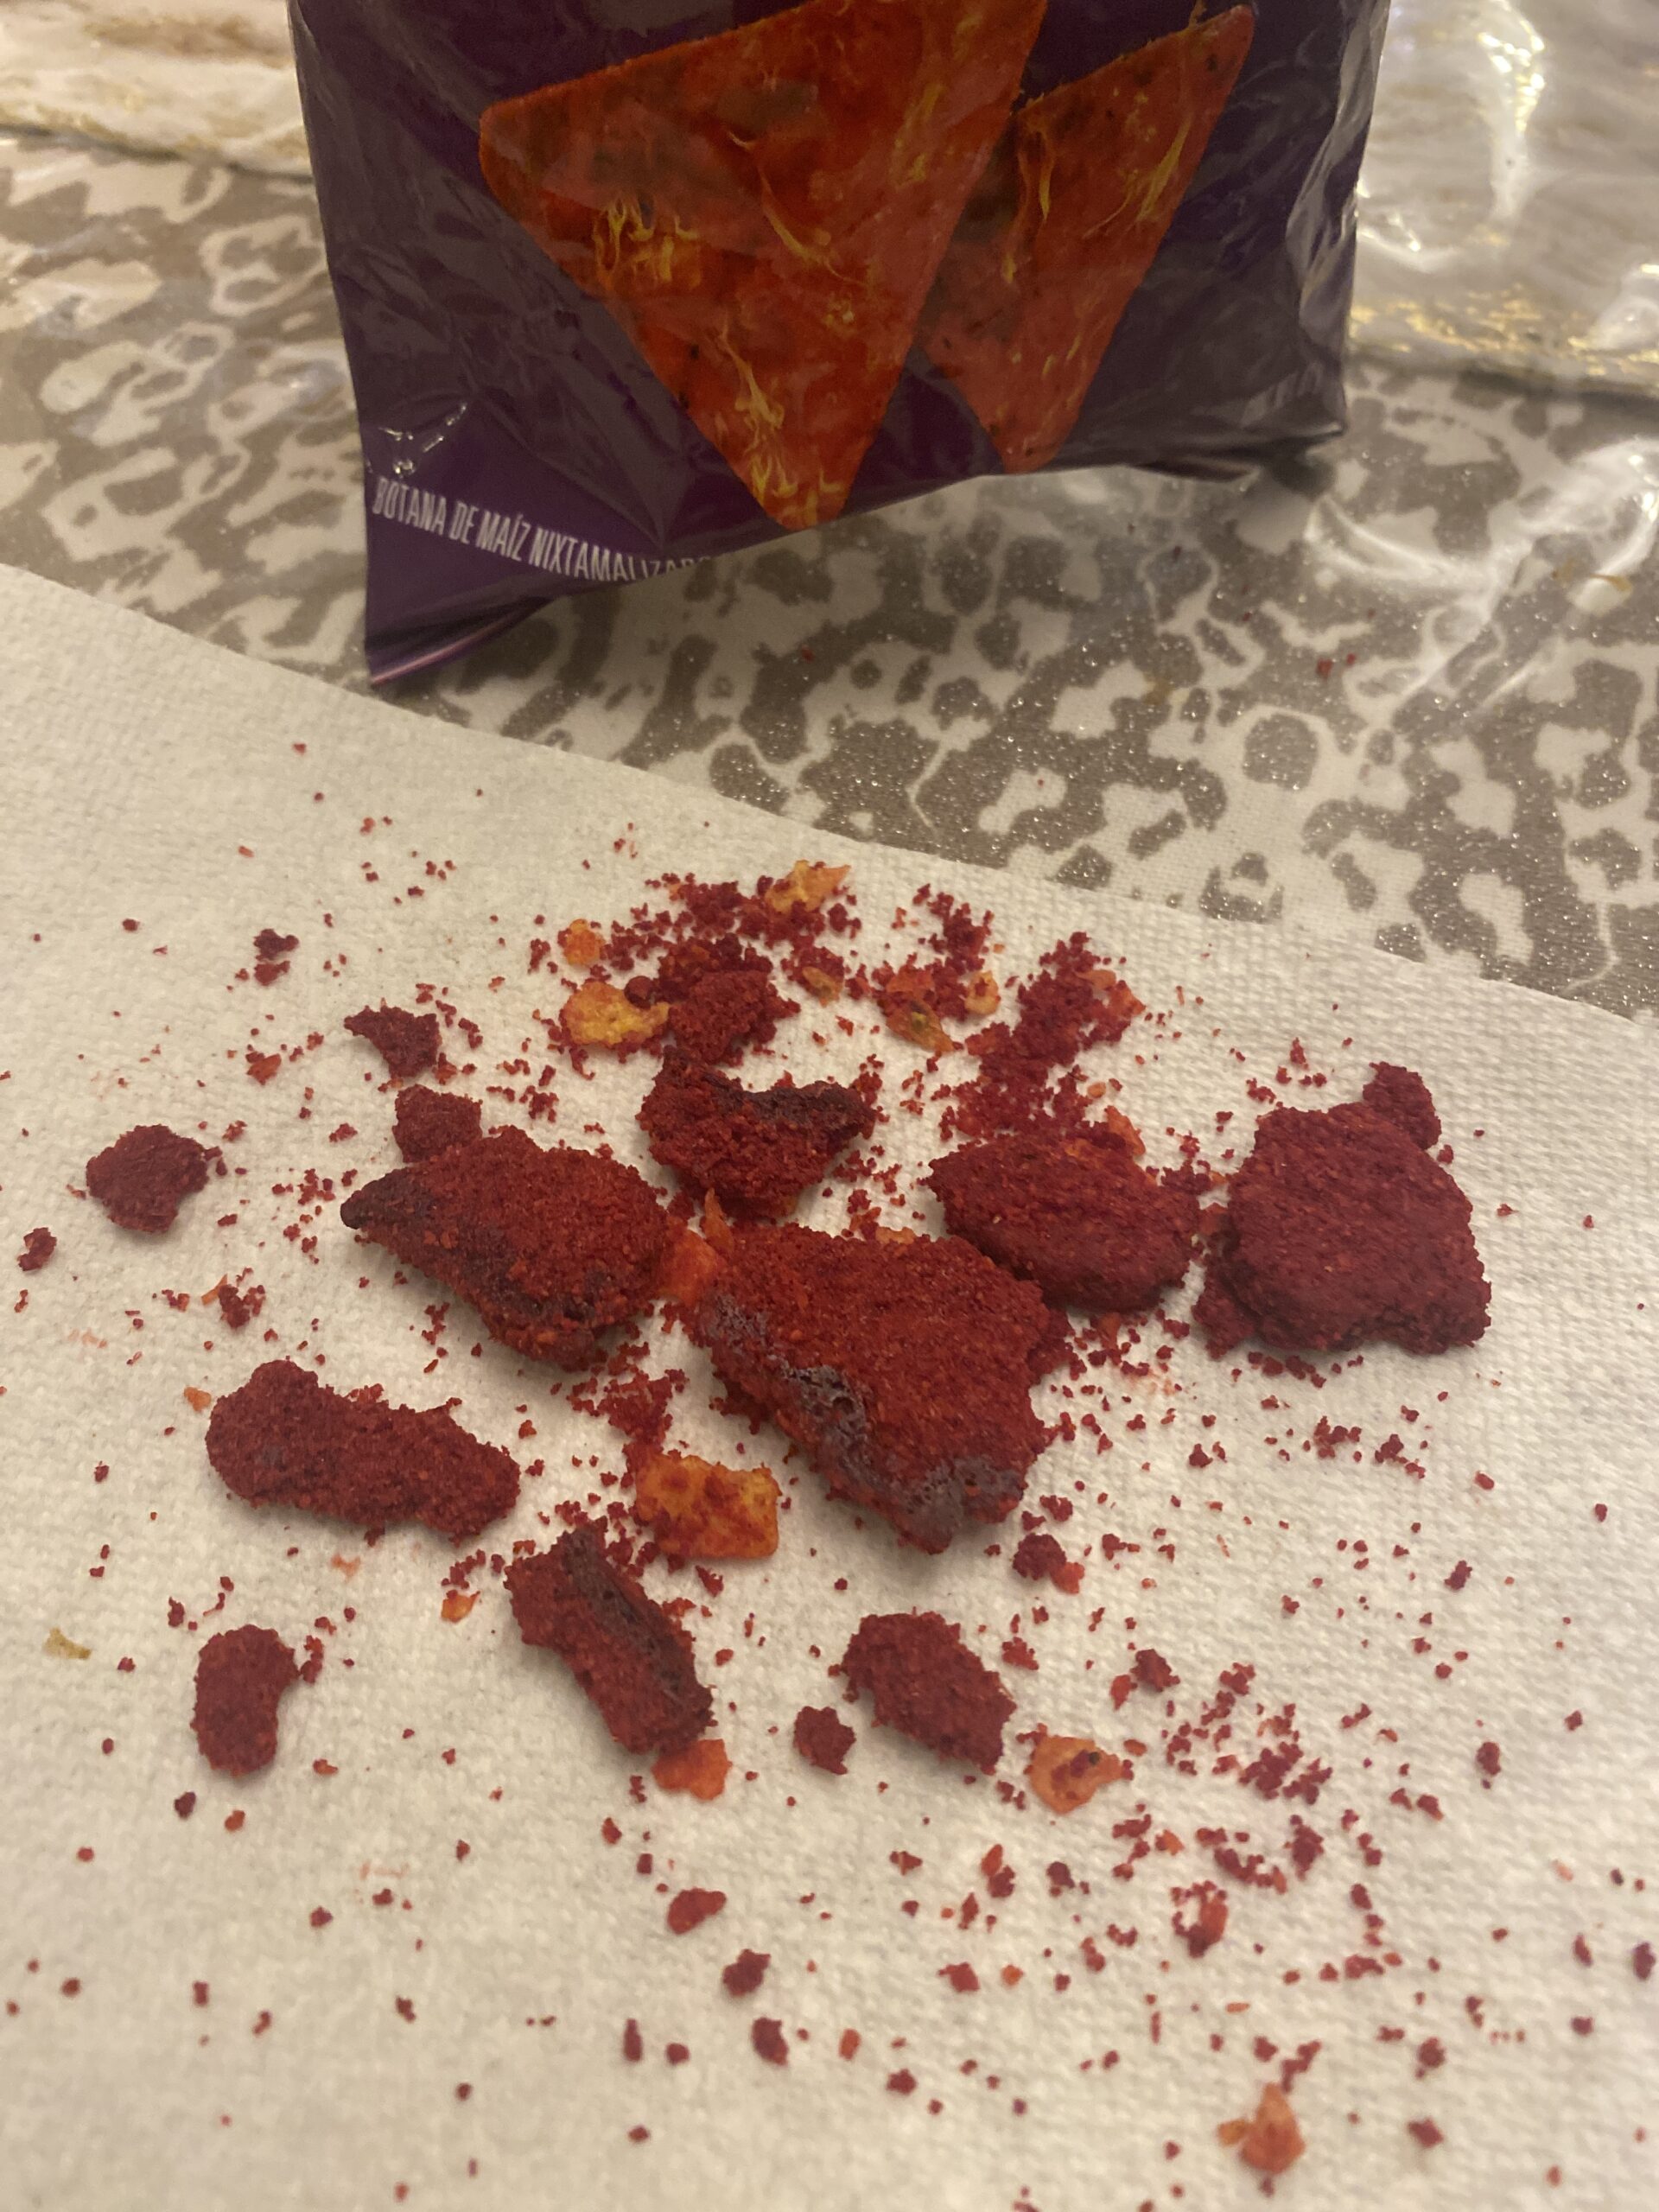 Doritos complaint Found burnt pieces